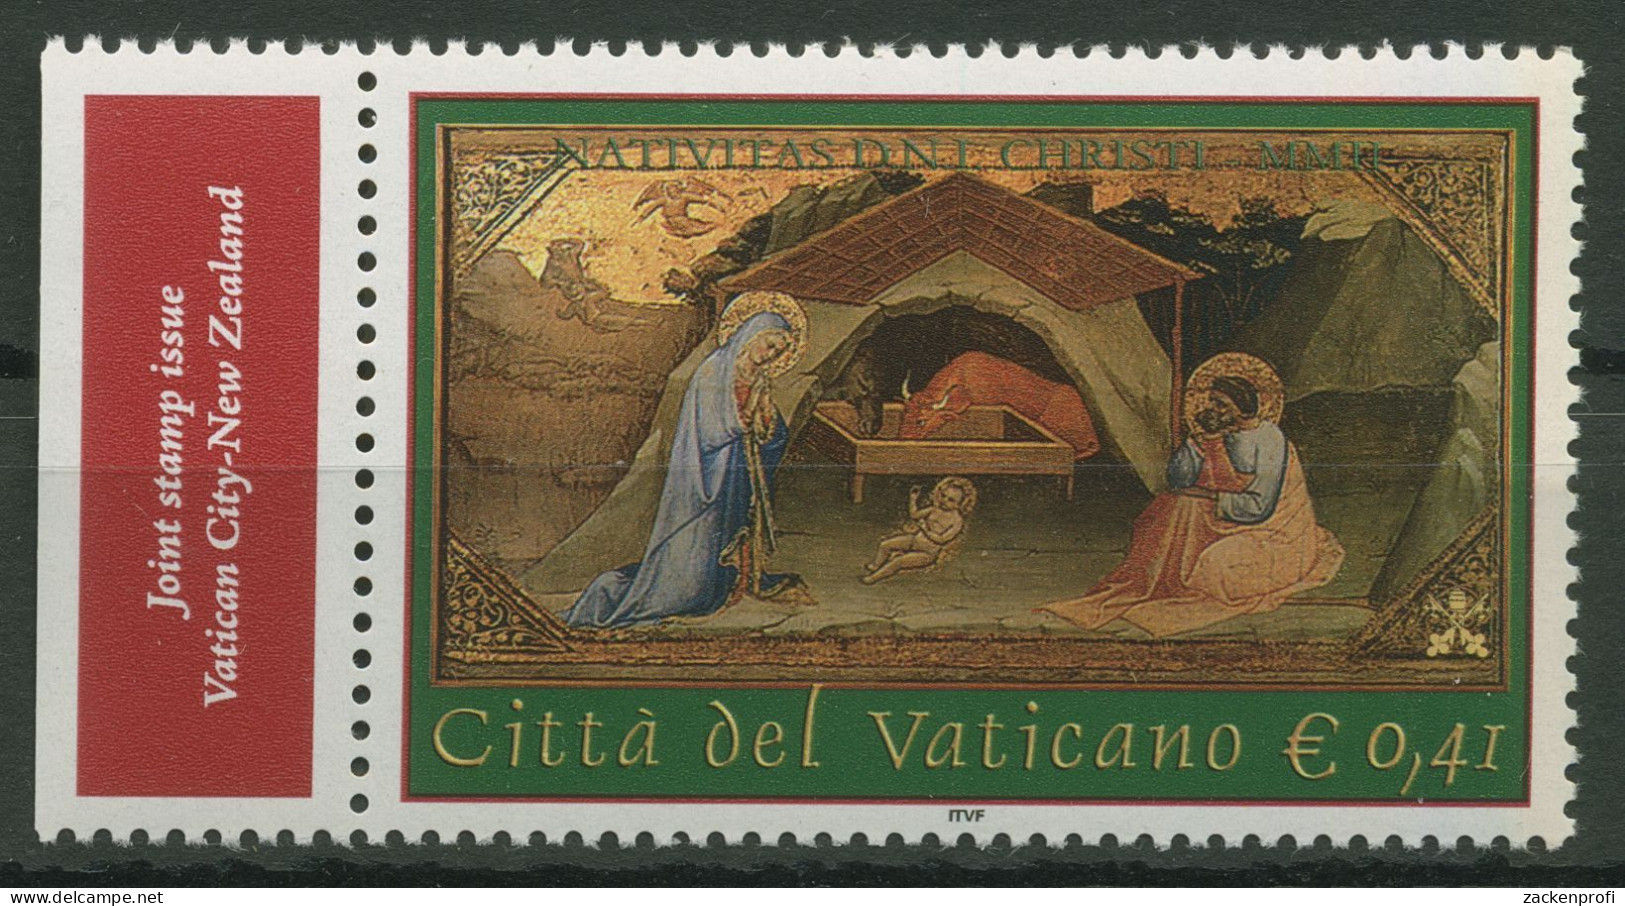 Vatikan 2002 Weihnachten Altartafel 2427 Postfrisch - Ongebruikt